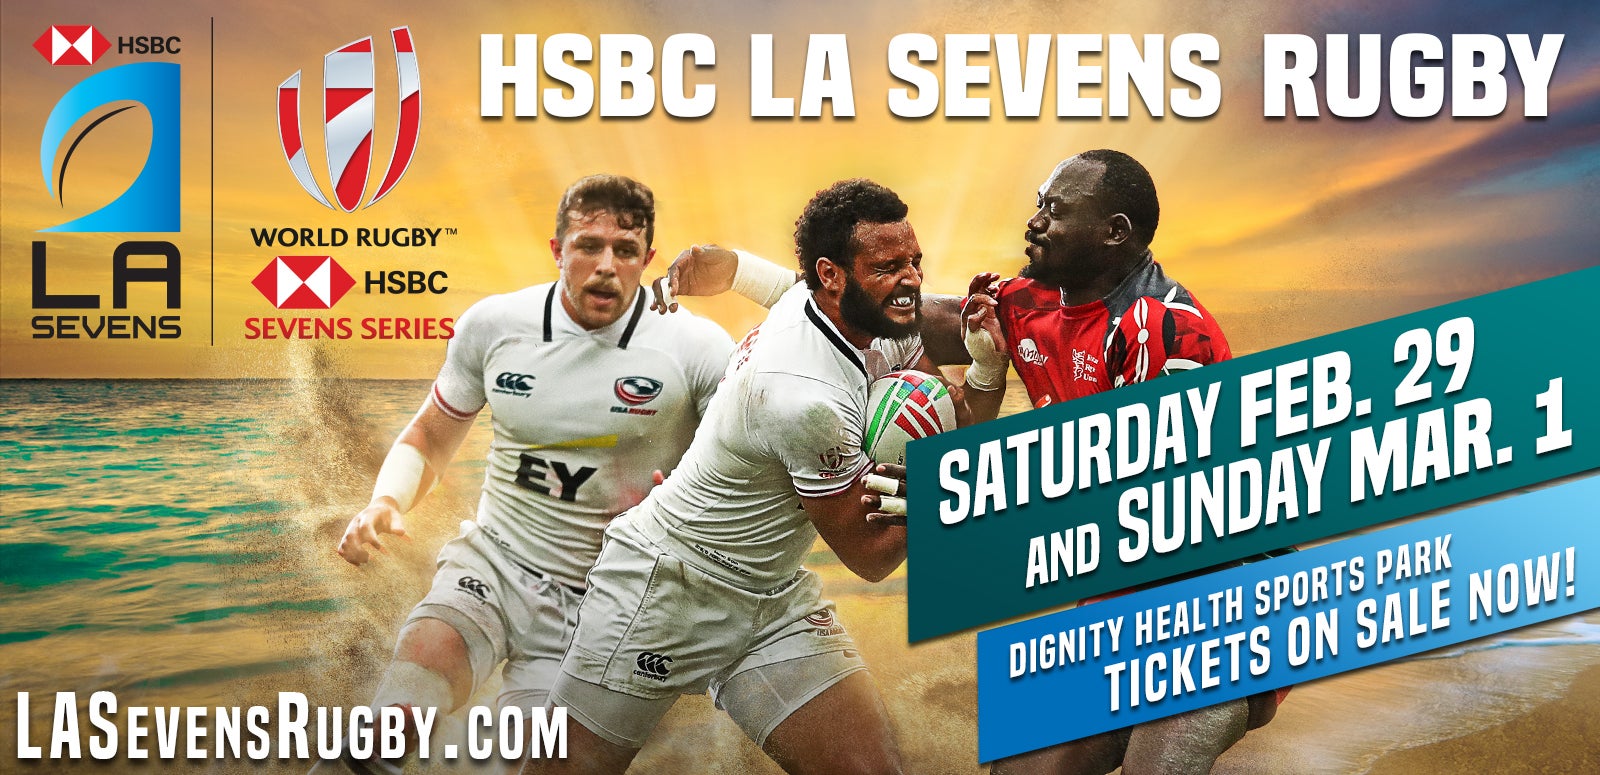 HSBC World Rugby Sevens Series